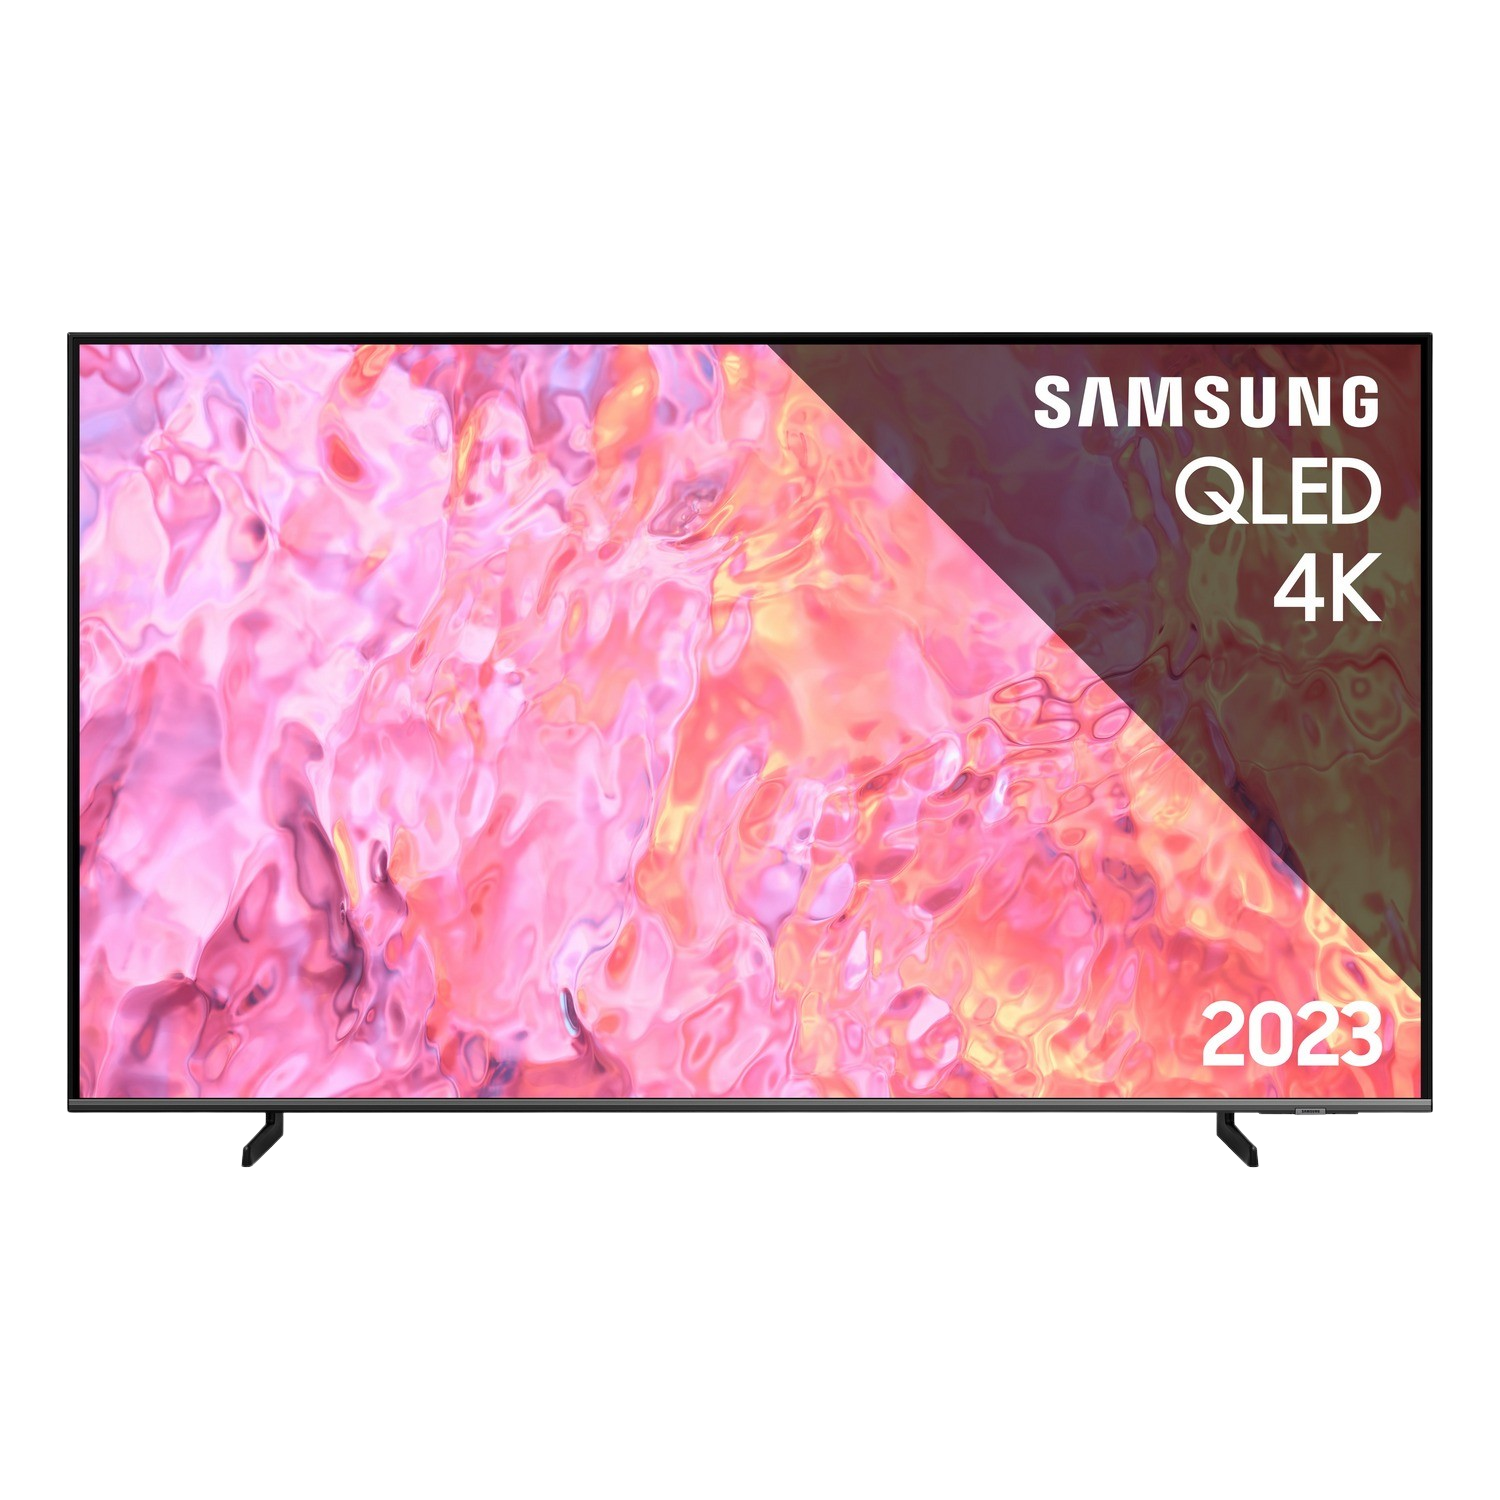 SAMSUNG QLED 4K 43Q64C (2023)